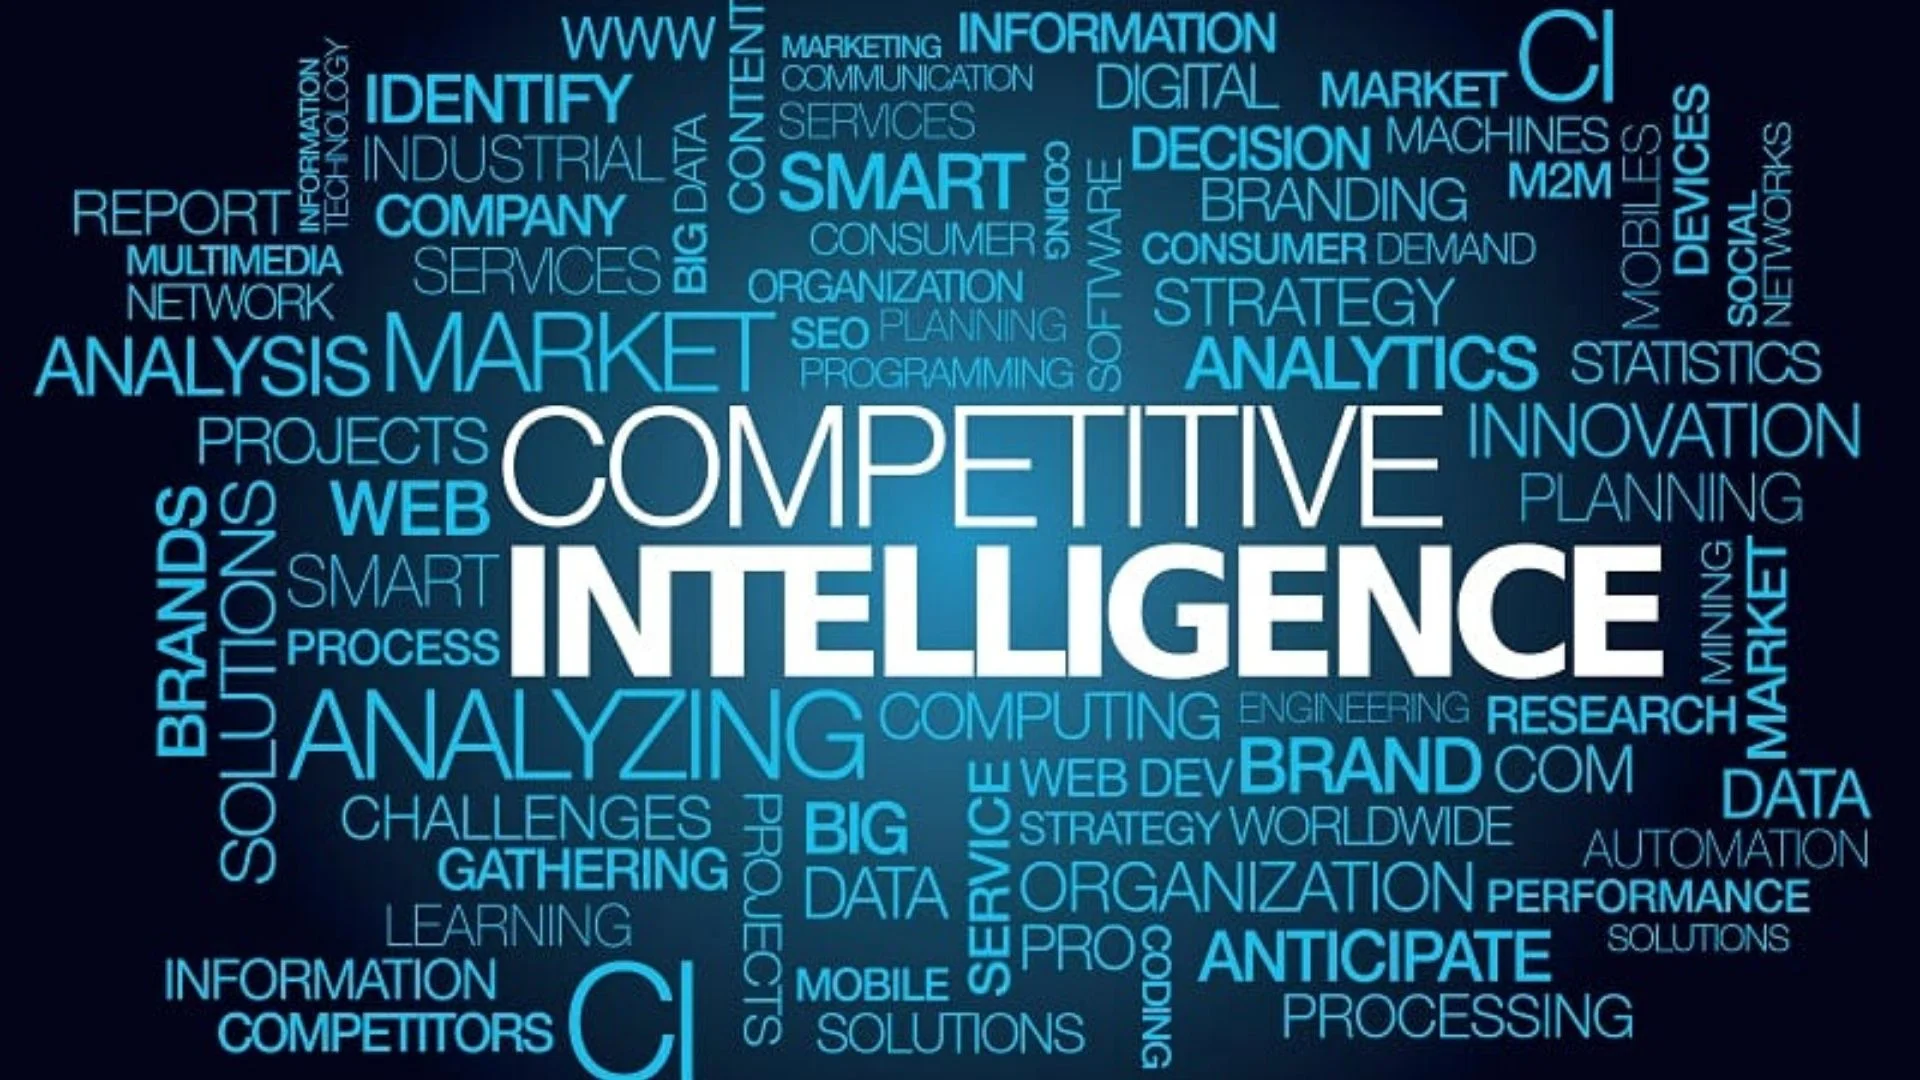 competitive-intelligence